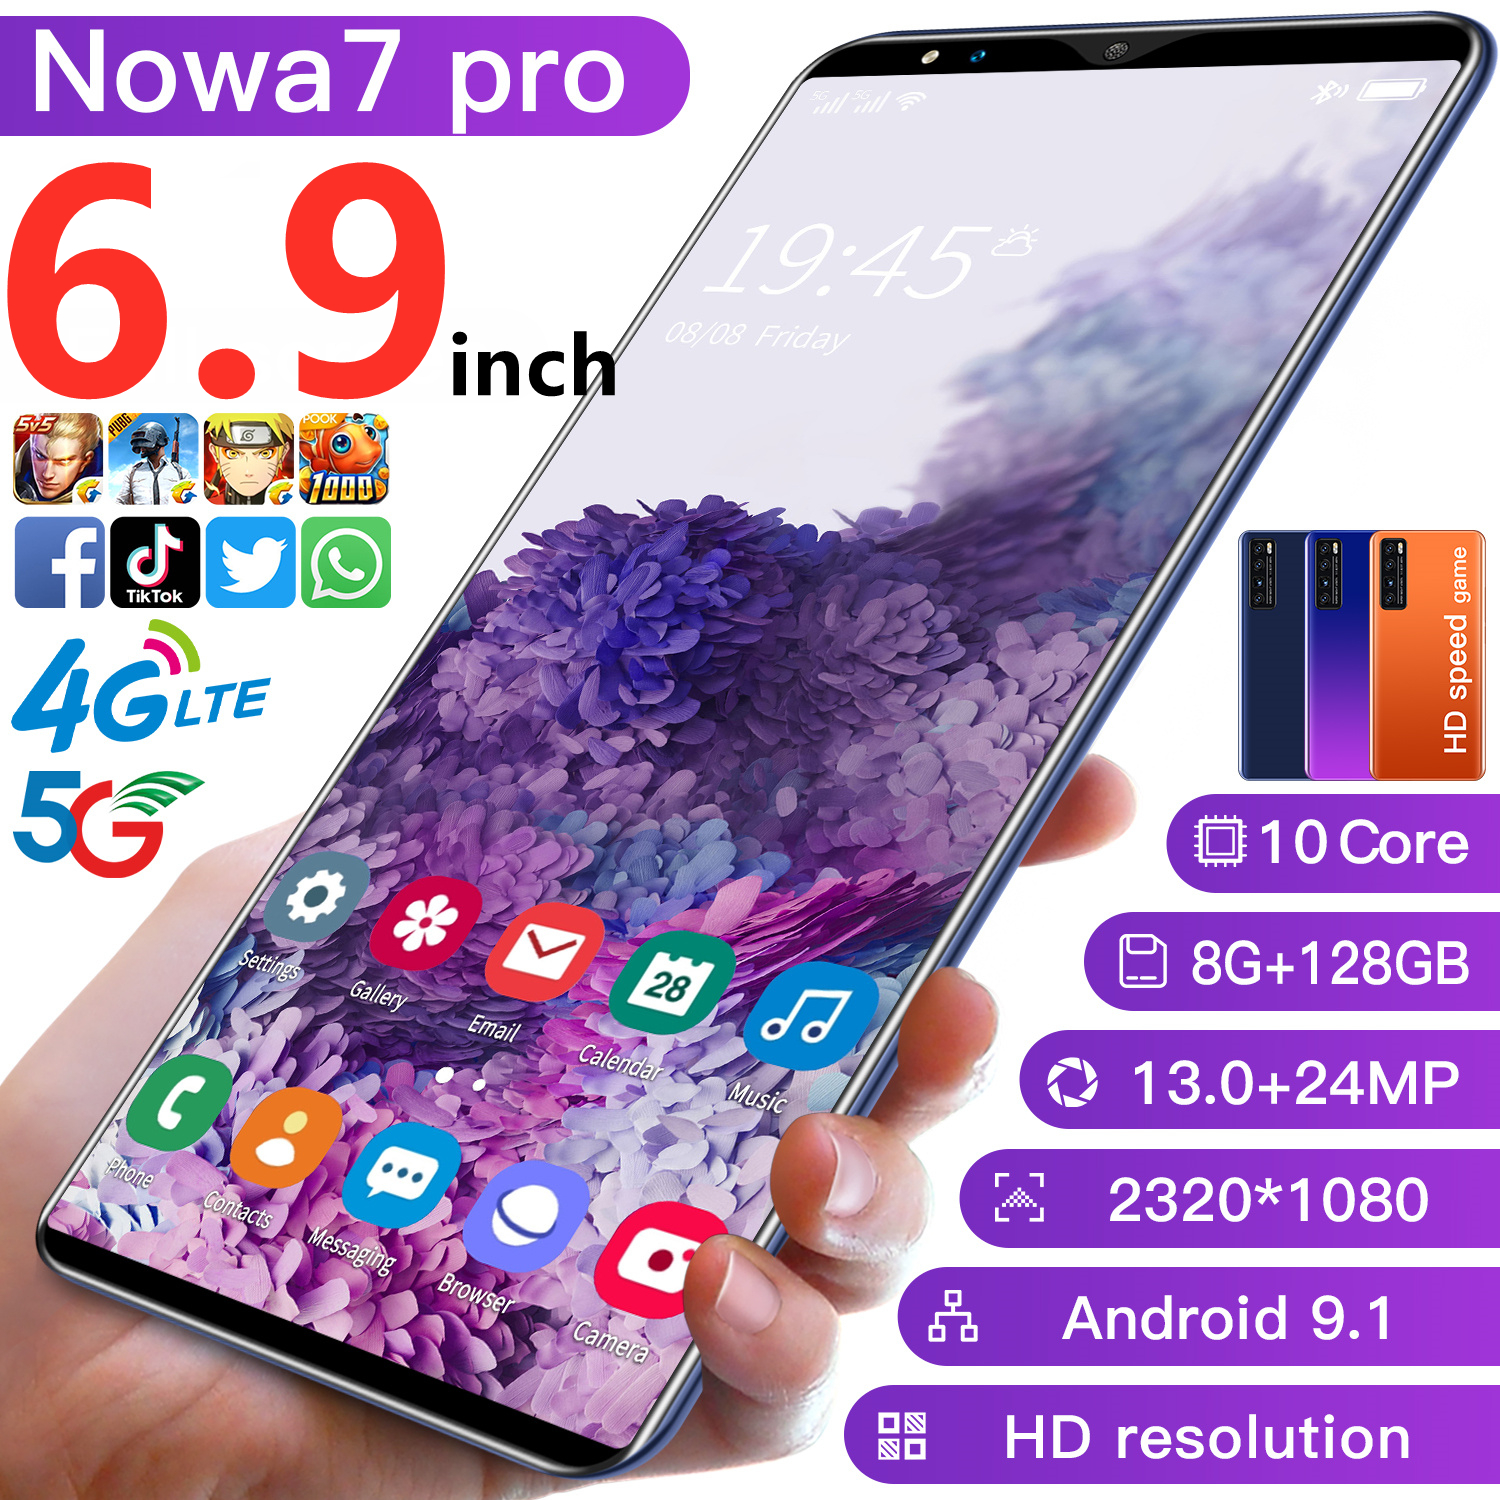 HUAWI Nowa 7 smartphone โทรศัพท์ราคาถูก สมาร์ทโฟนหน่วยความจำ 64G+128Gจอ 6.9นิ้วHD เต็มหน้าจอ แบตเตอรี่ 4800 mAh ถ่ายภาพ โทรสัพราคาถูก ชาร์จไว ชมภาพยนต์เก